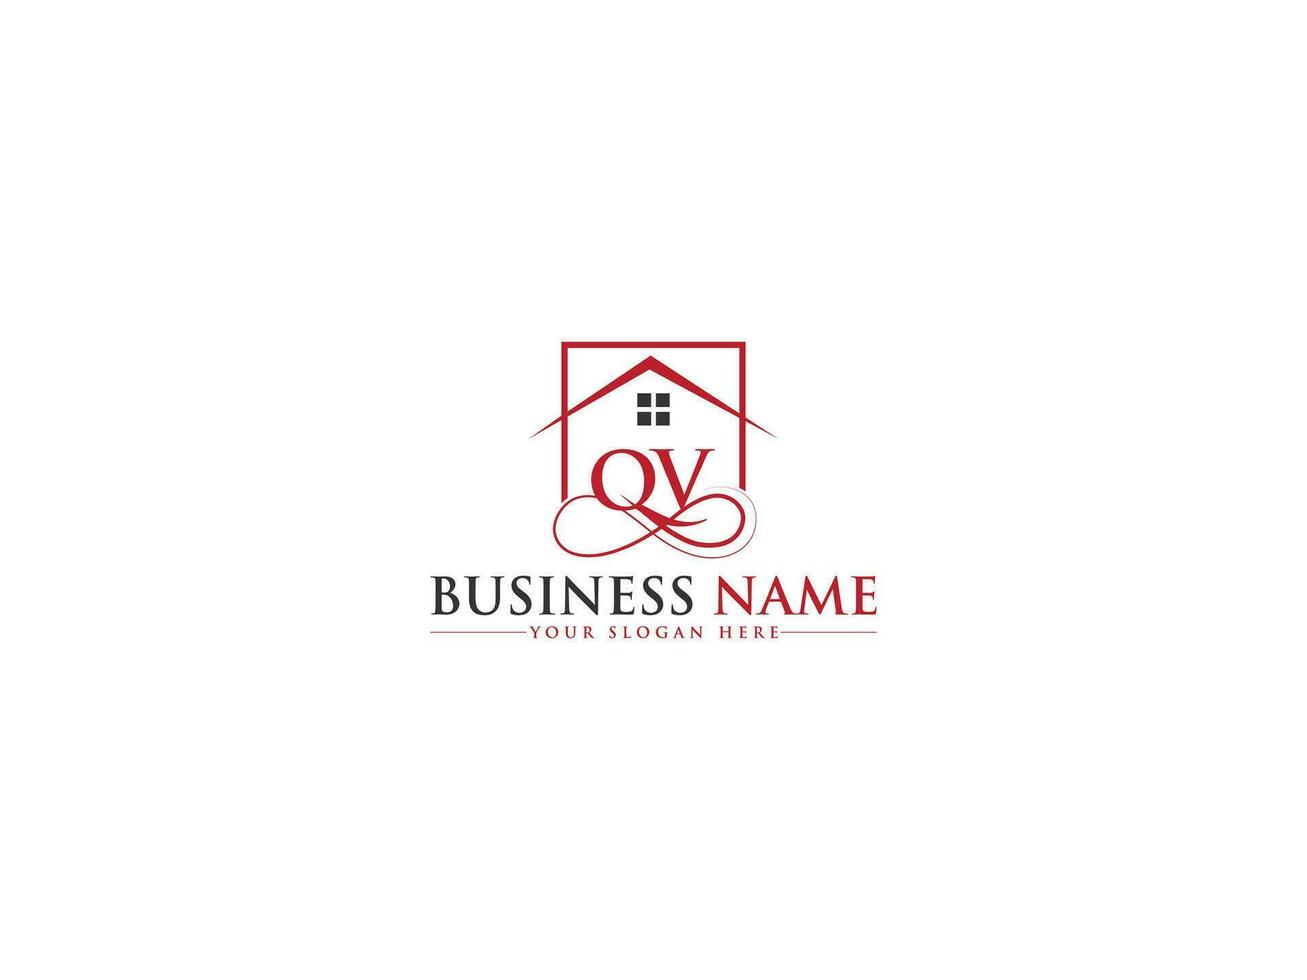 Luxury House Qv Logo Letter, Creative Building QV Real Estate Logo Vector